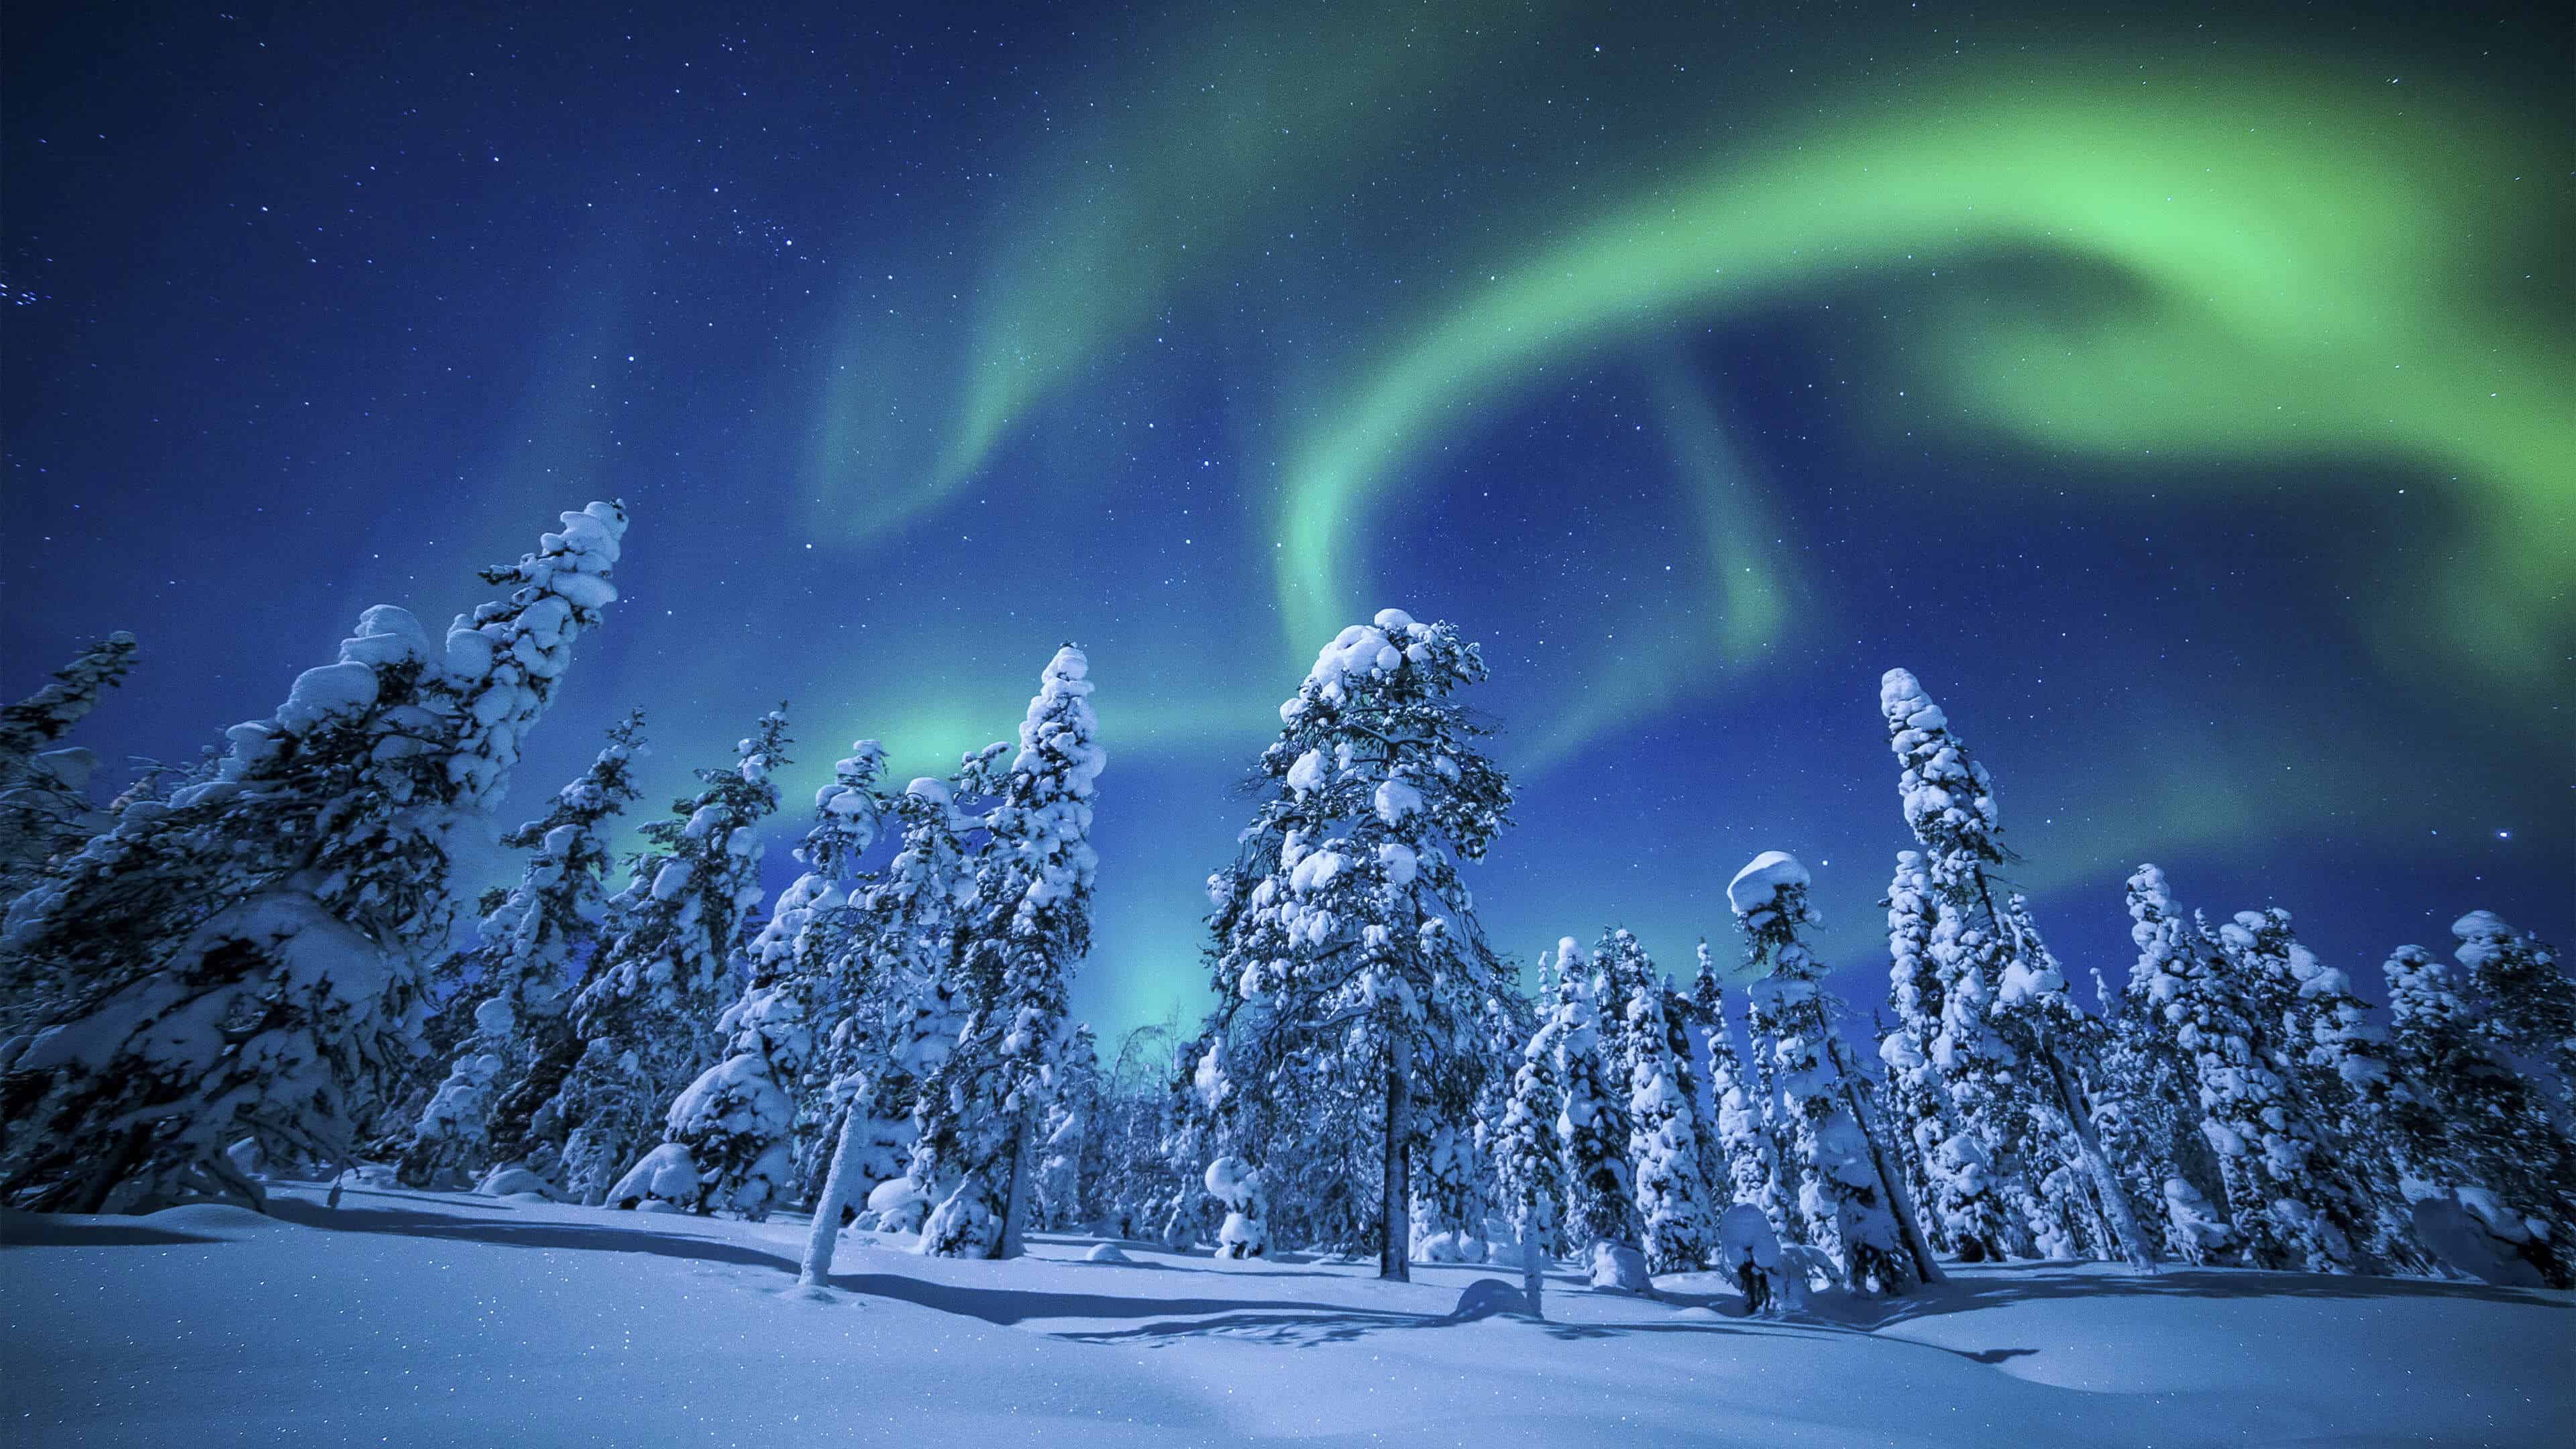 Northern Lights (Aurora Borealis) Over Winter Forest UHD 4K Wallpaper